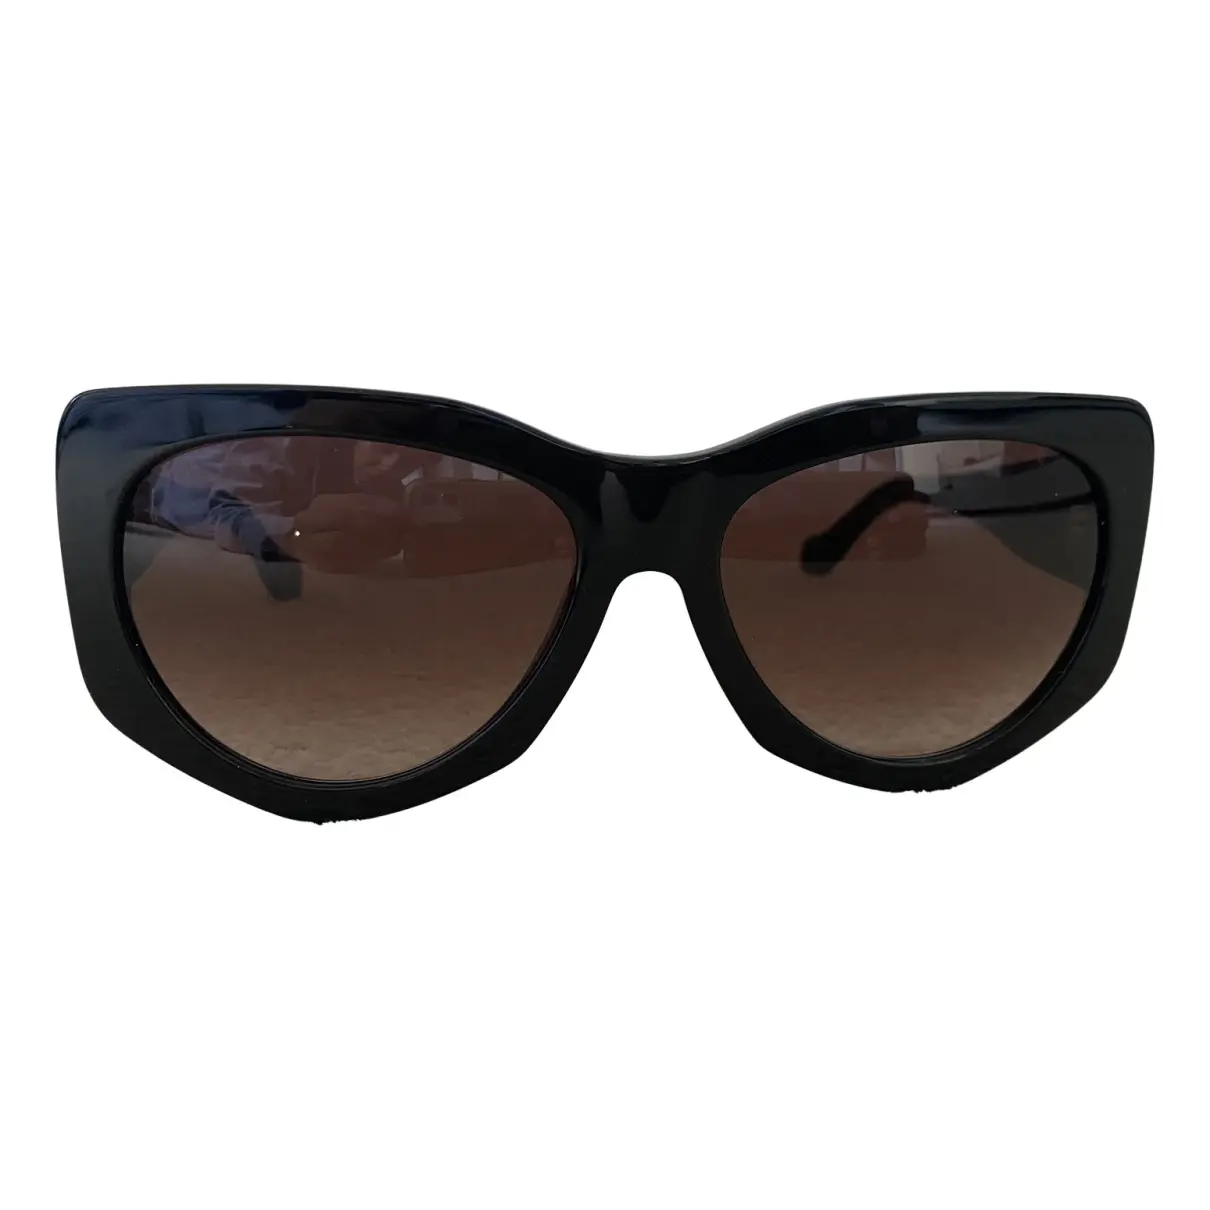 Paris D-Frame sunglasses